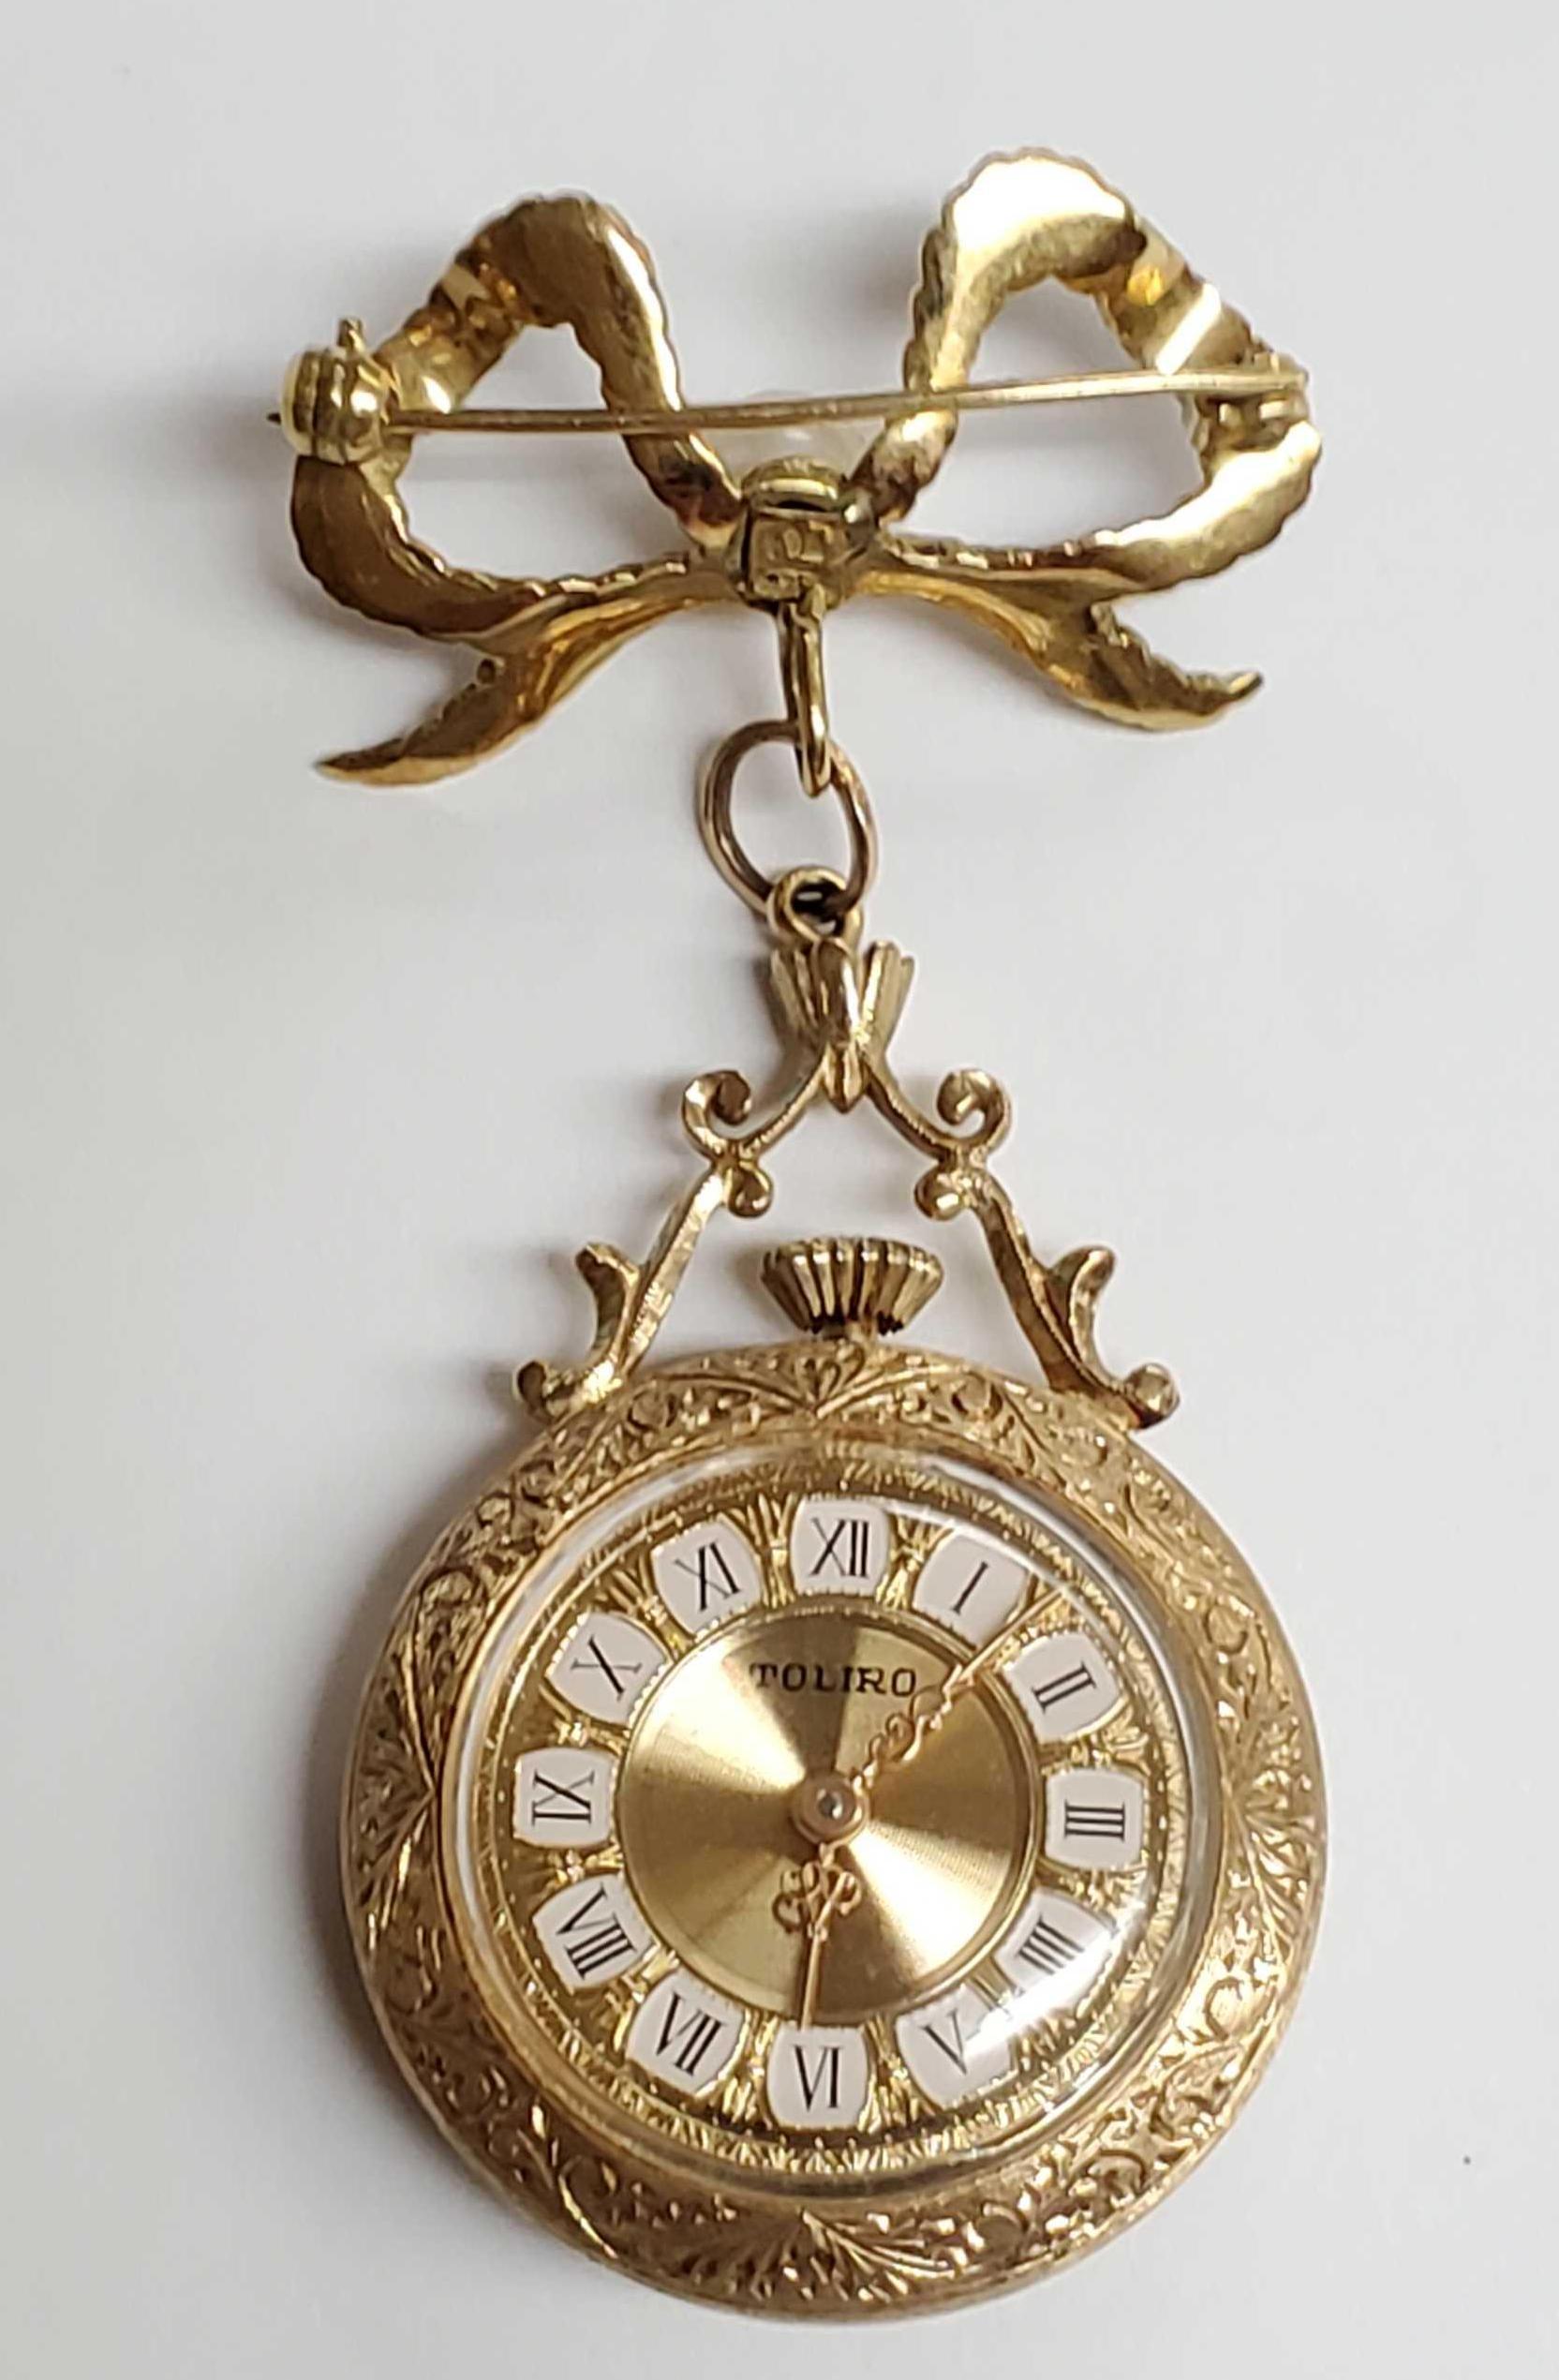 Gorgeous Vintage Toliro 18k Gold & Enamel Ladies Pendant / Brooch Watch with Hanger